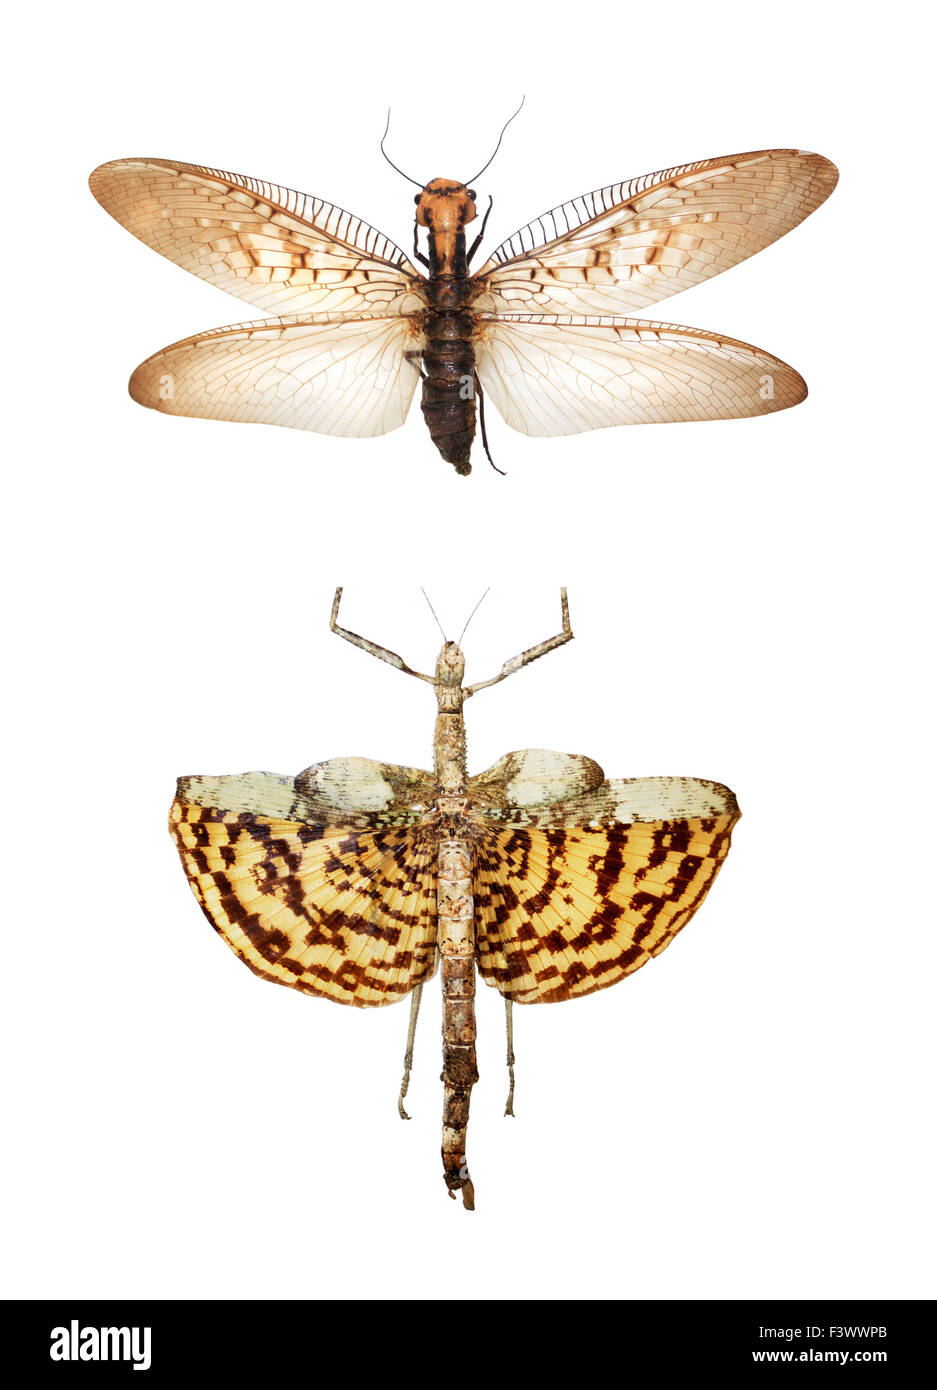 Giganteschi insetti tropicali Foto Stock